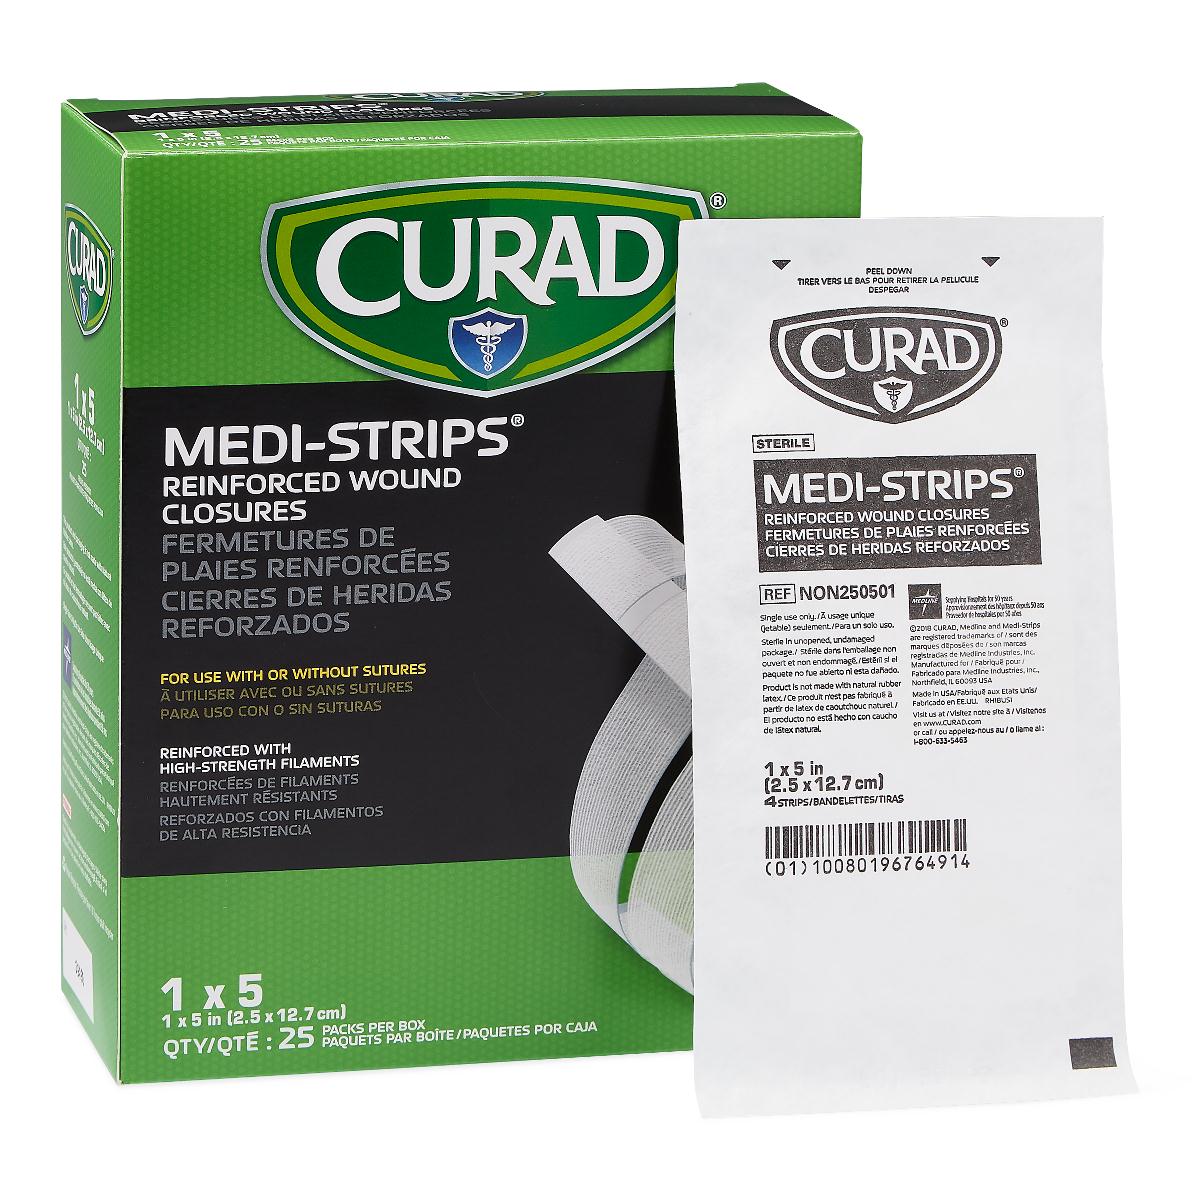 CURAD Medi-Strip Reinforced Wound Closures, White, Box of 100